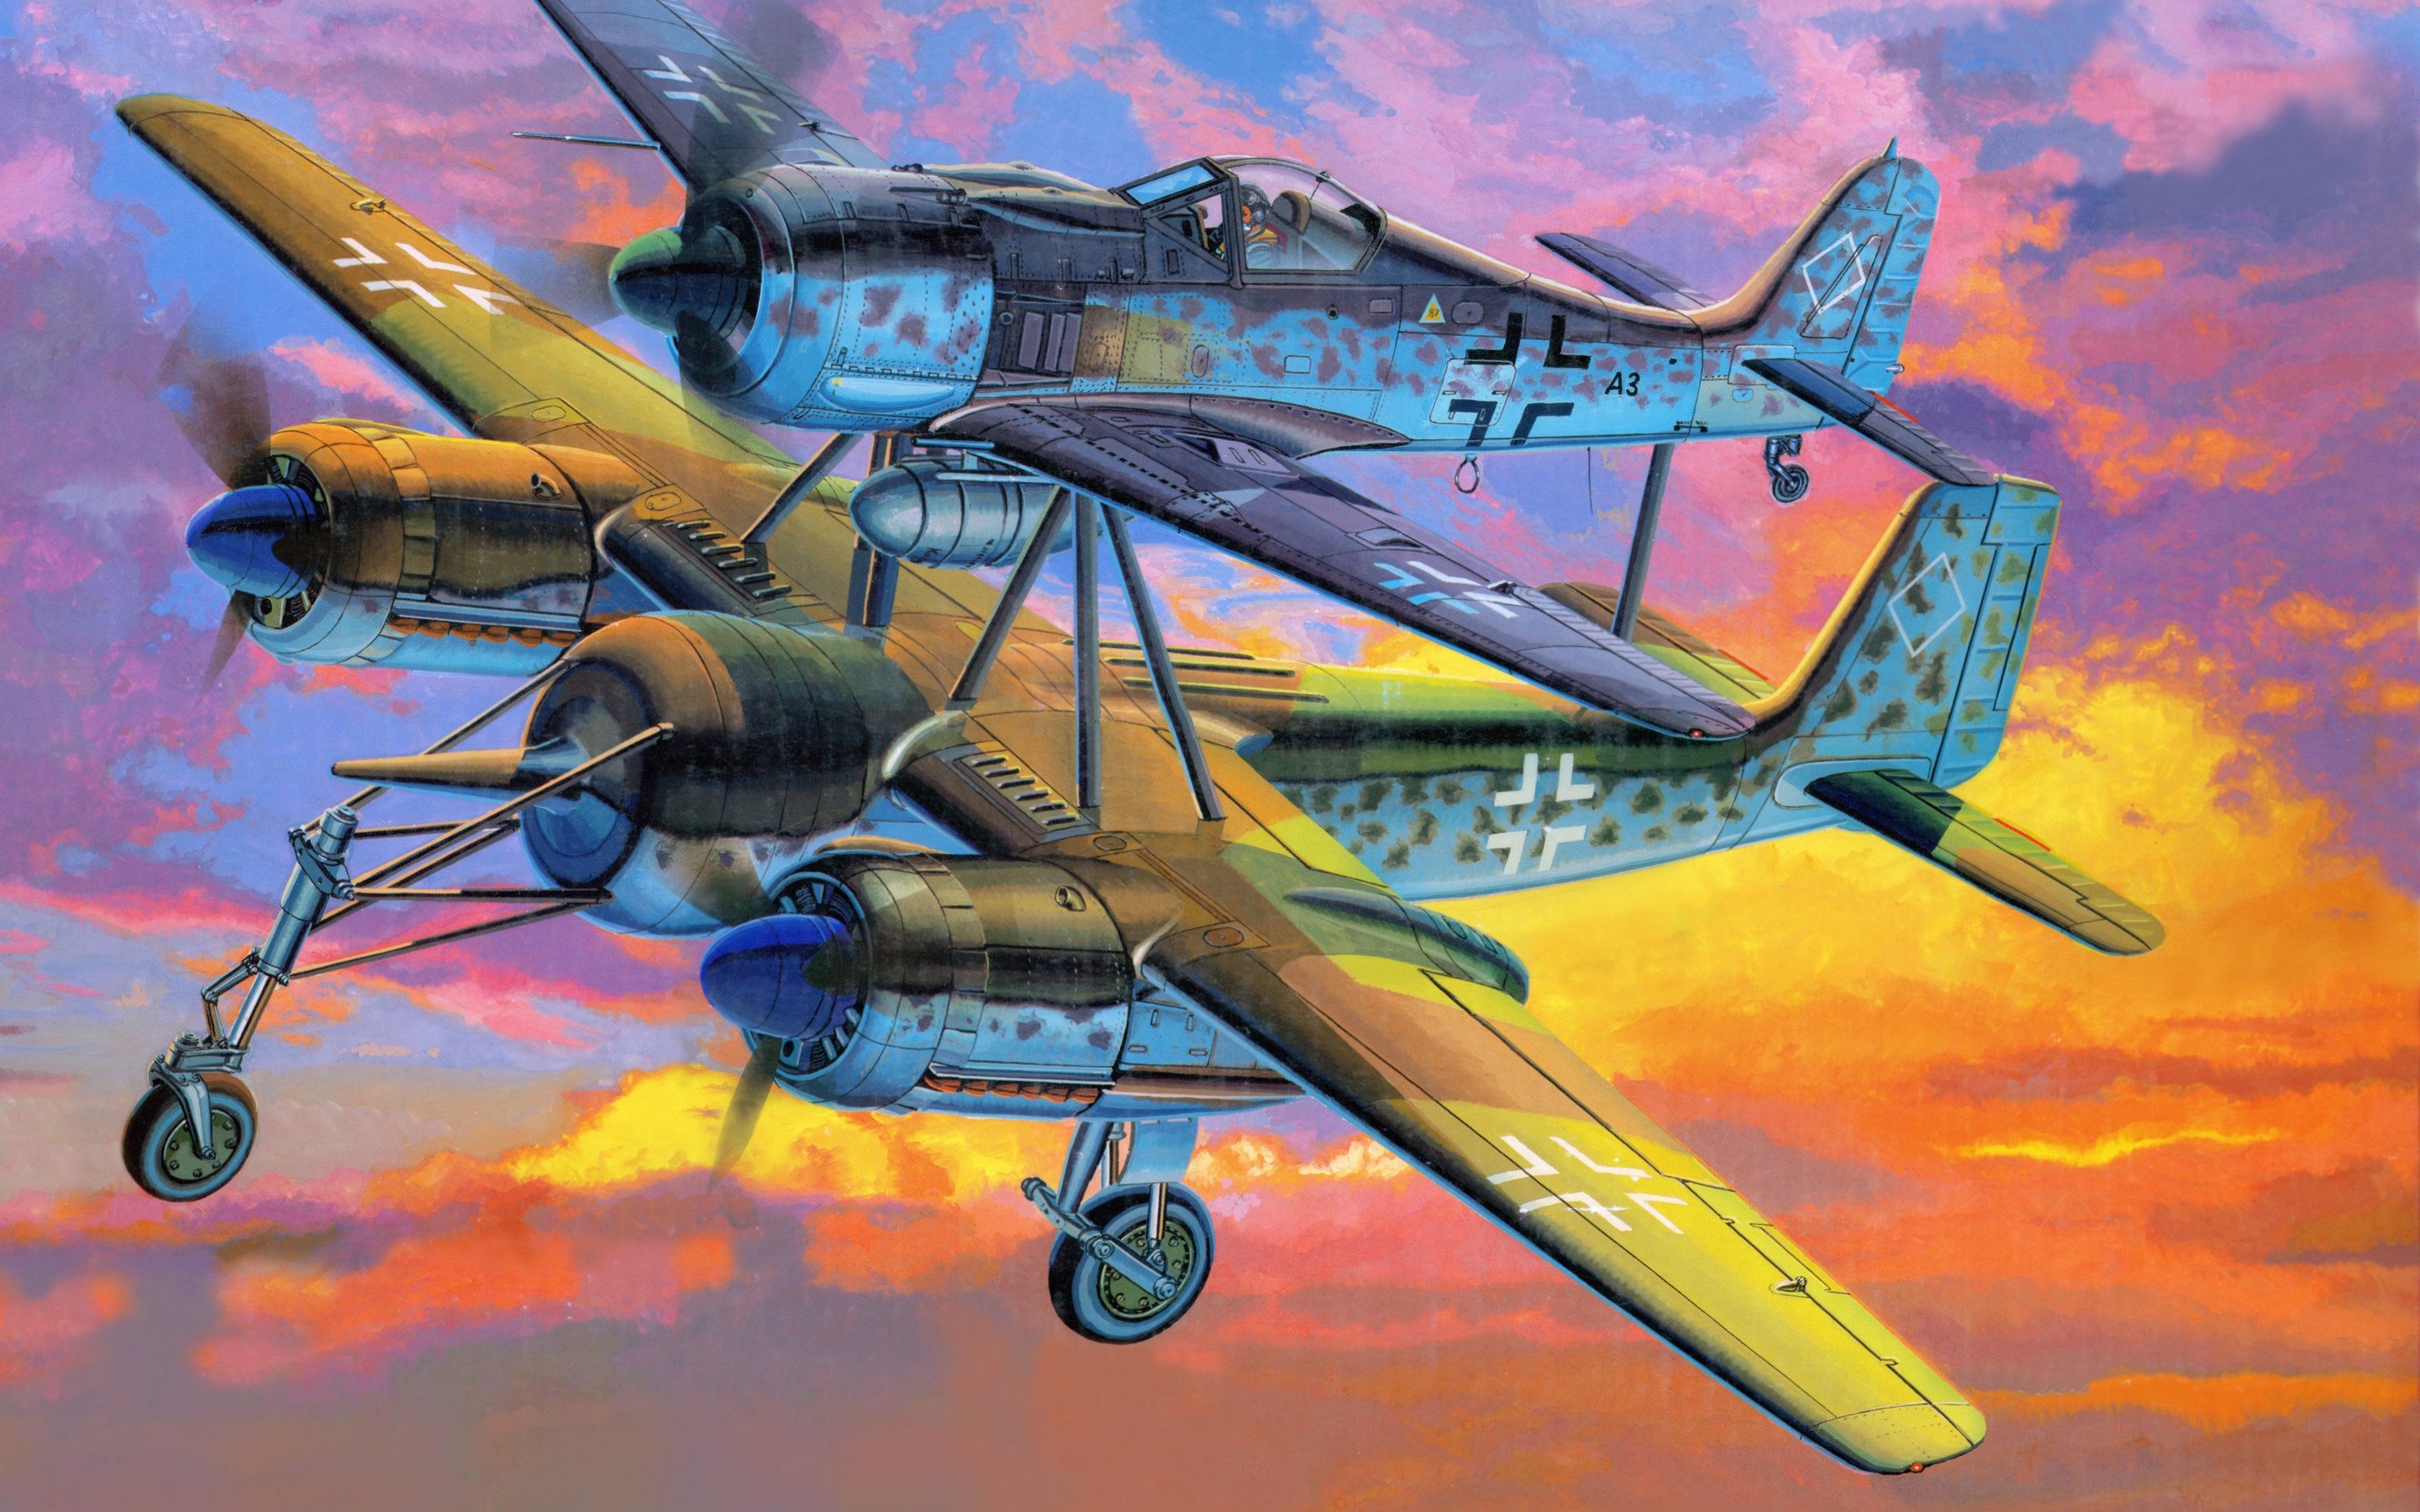 Focke Wulf Fw 190 Mistel for 2880 x 1800 Retina Display resolution